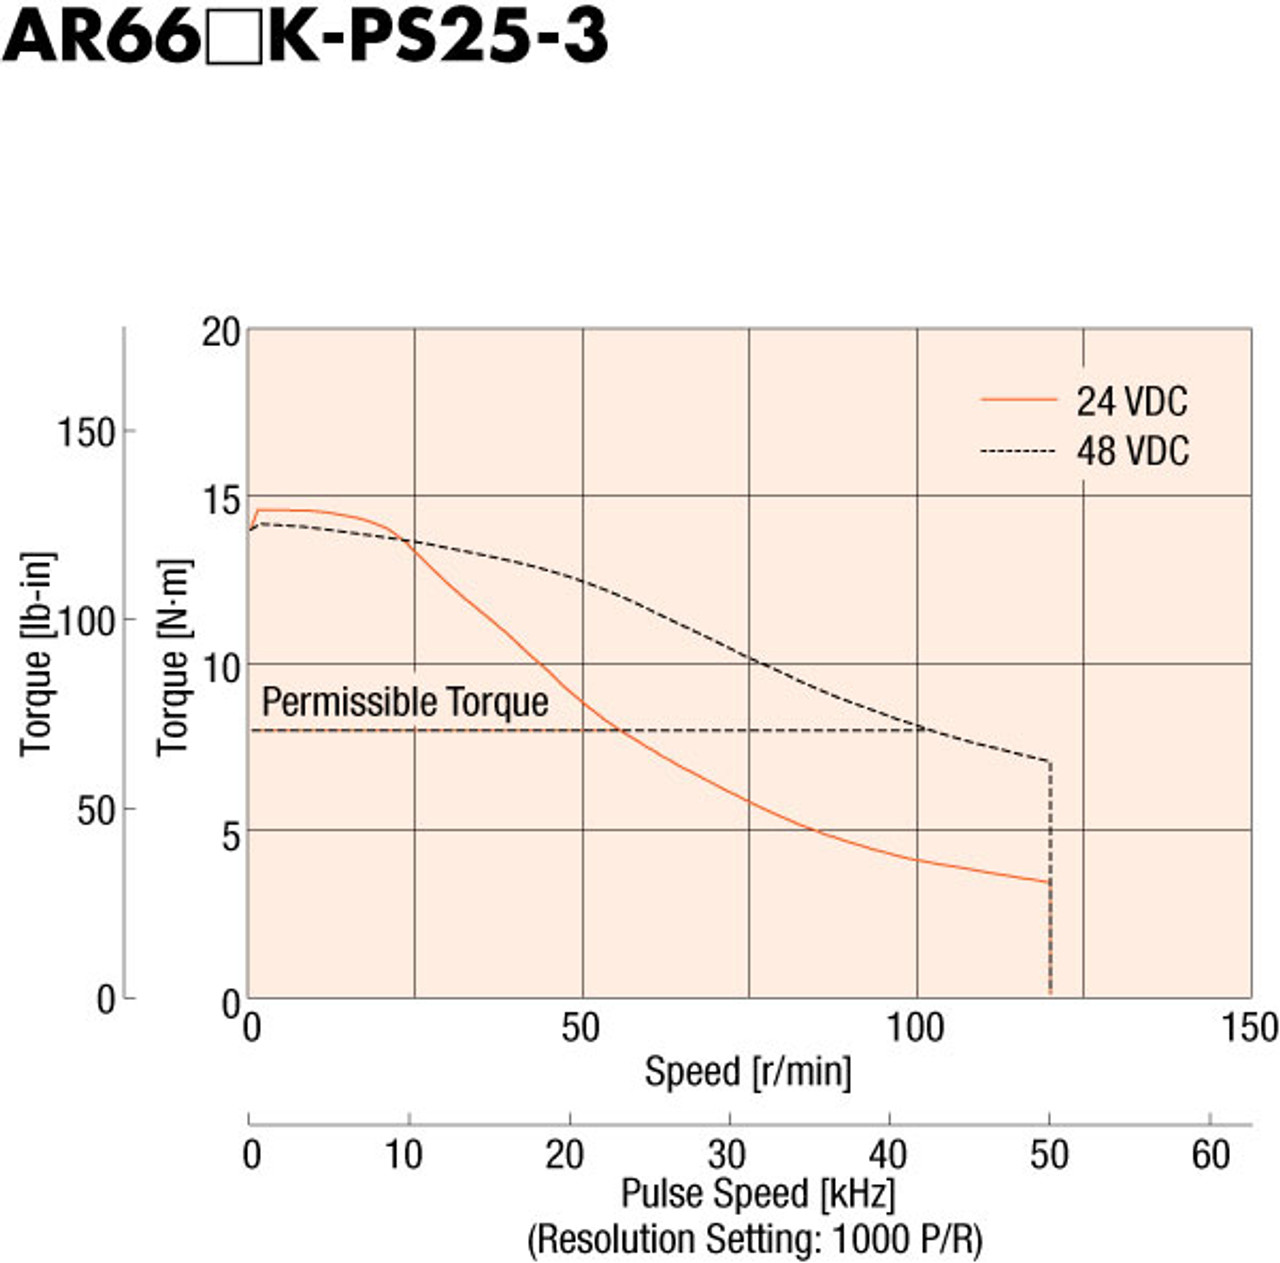 AR66MKD-PS25-3 - Speed-Torque